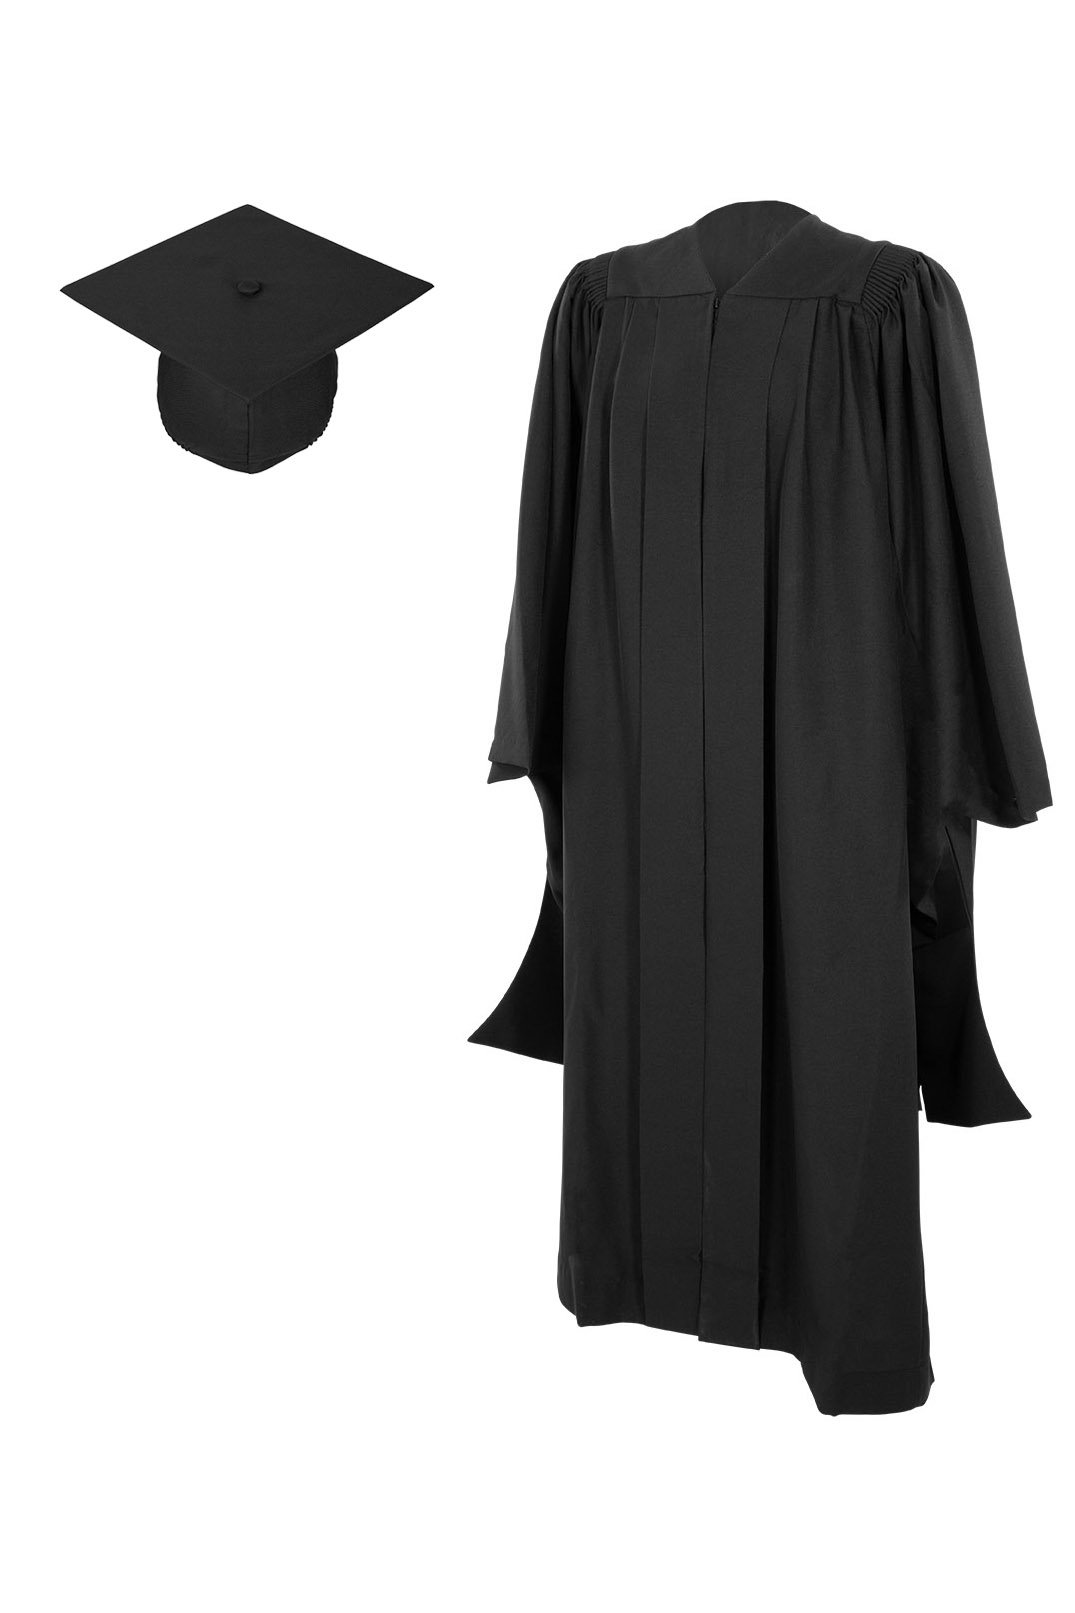 Black Graduation Tassel for Graduation | Cap and Gown Direct